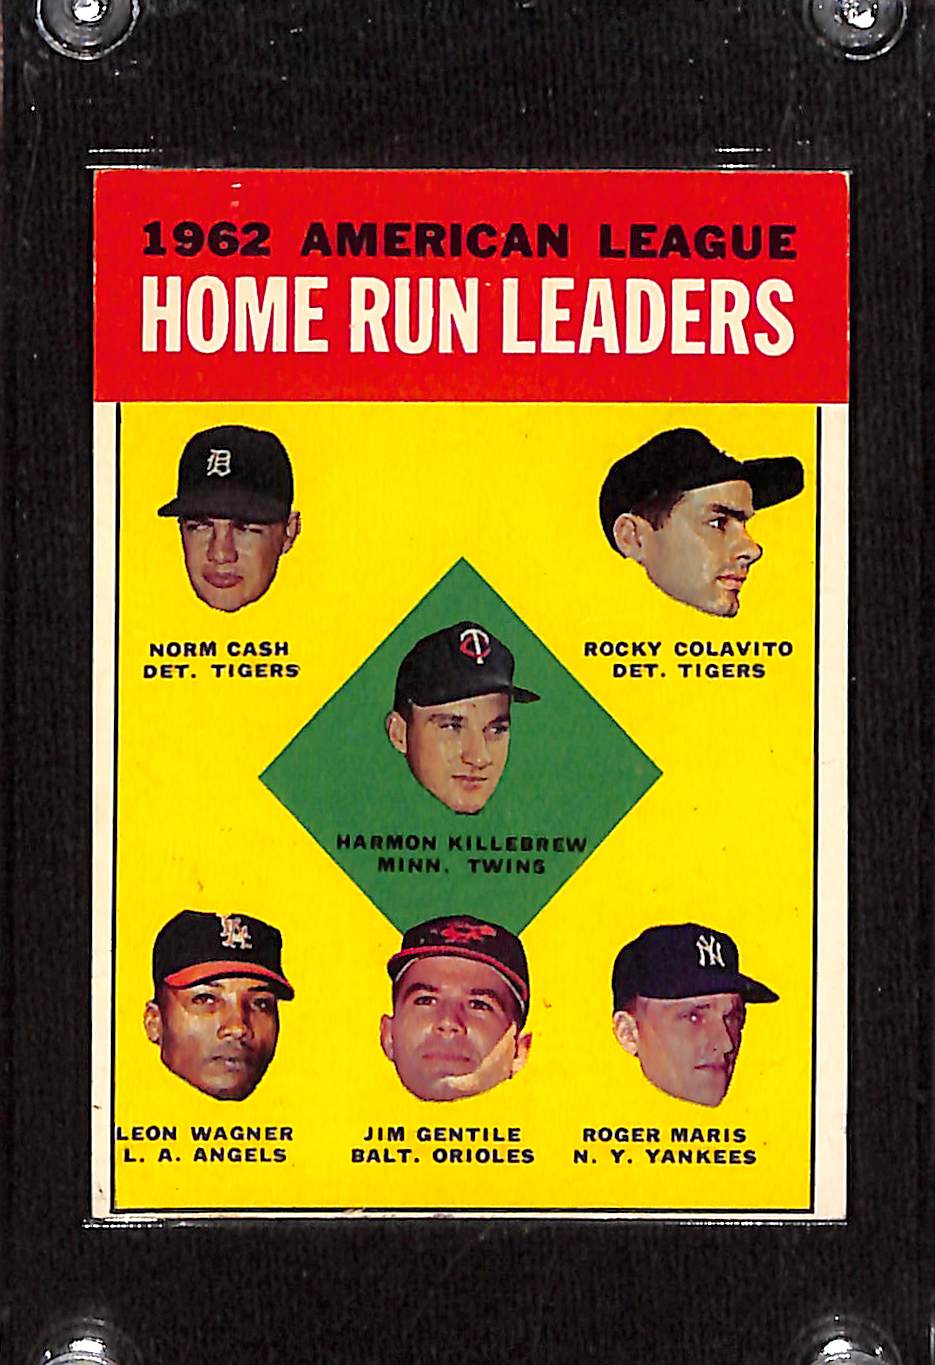 FIINR Baseball Card 1963 AL Topps Home Run Leaders Roger Maris Baseball Card #4 - Mint Condition